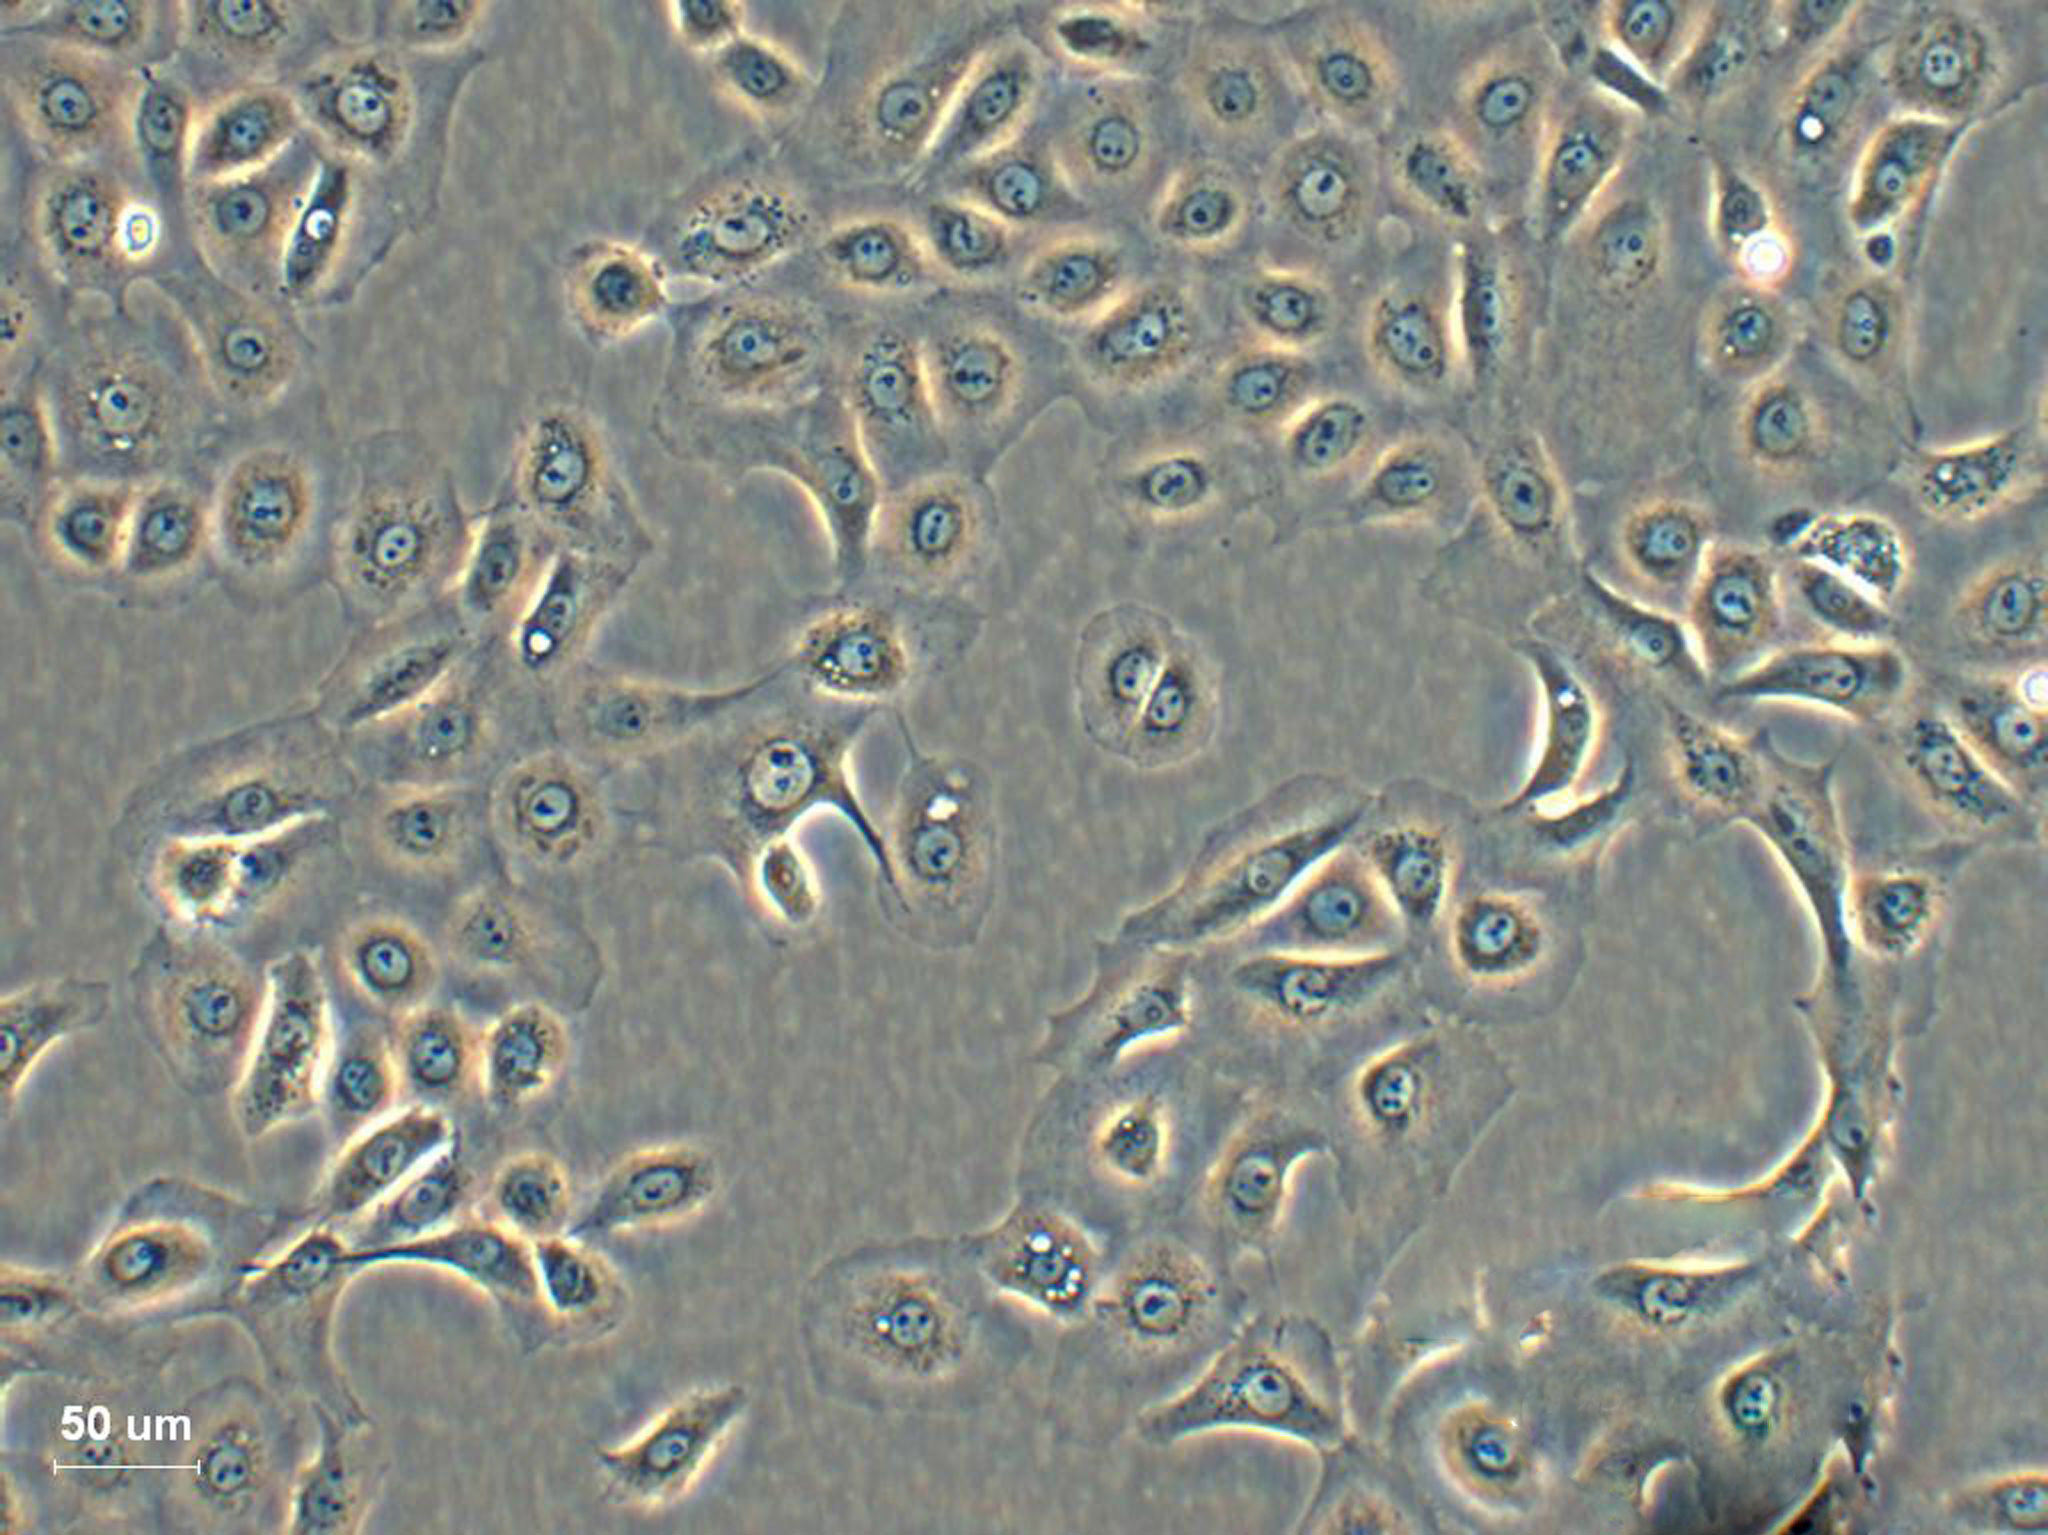 M059J epithelioid cells人脑神经胶质瘤细胞系,M059J epithelioid cells